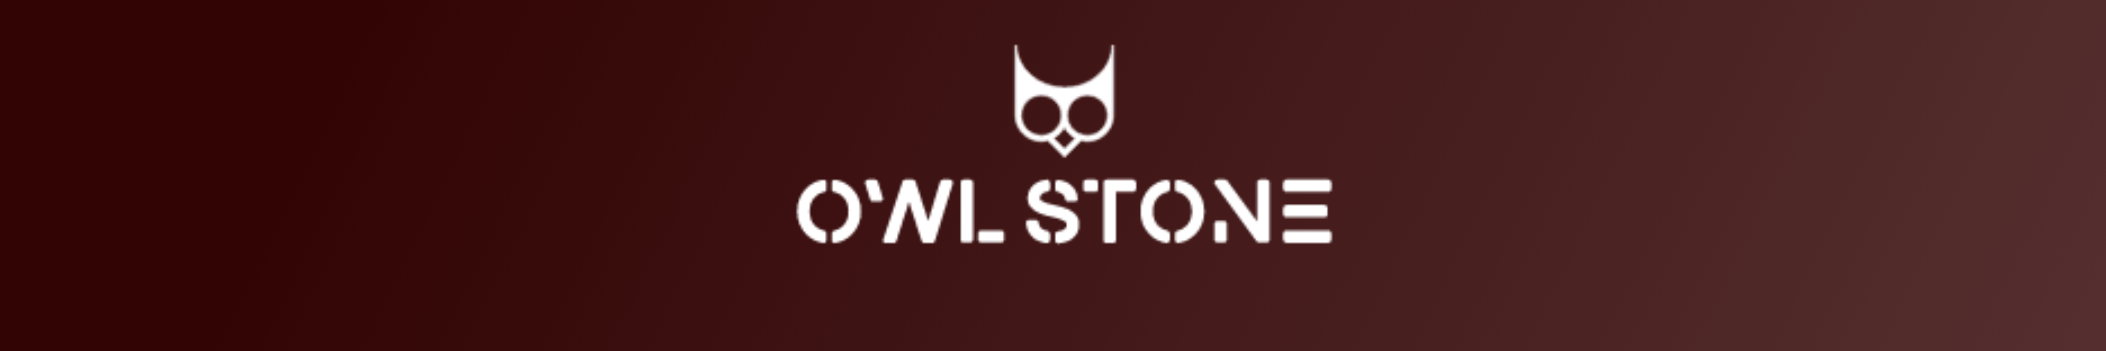 Owl Stone